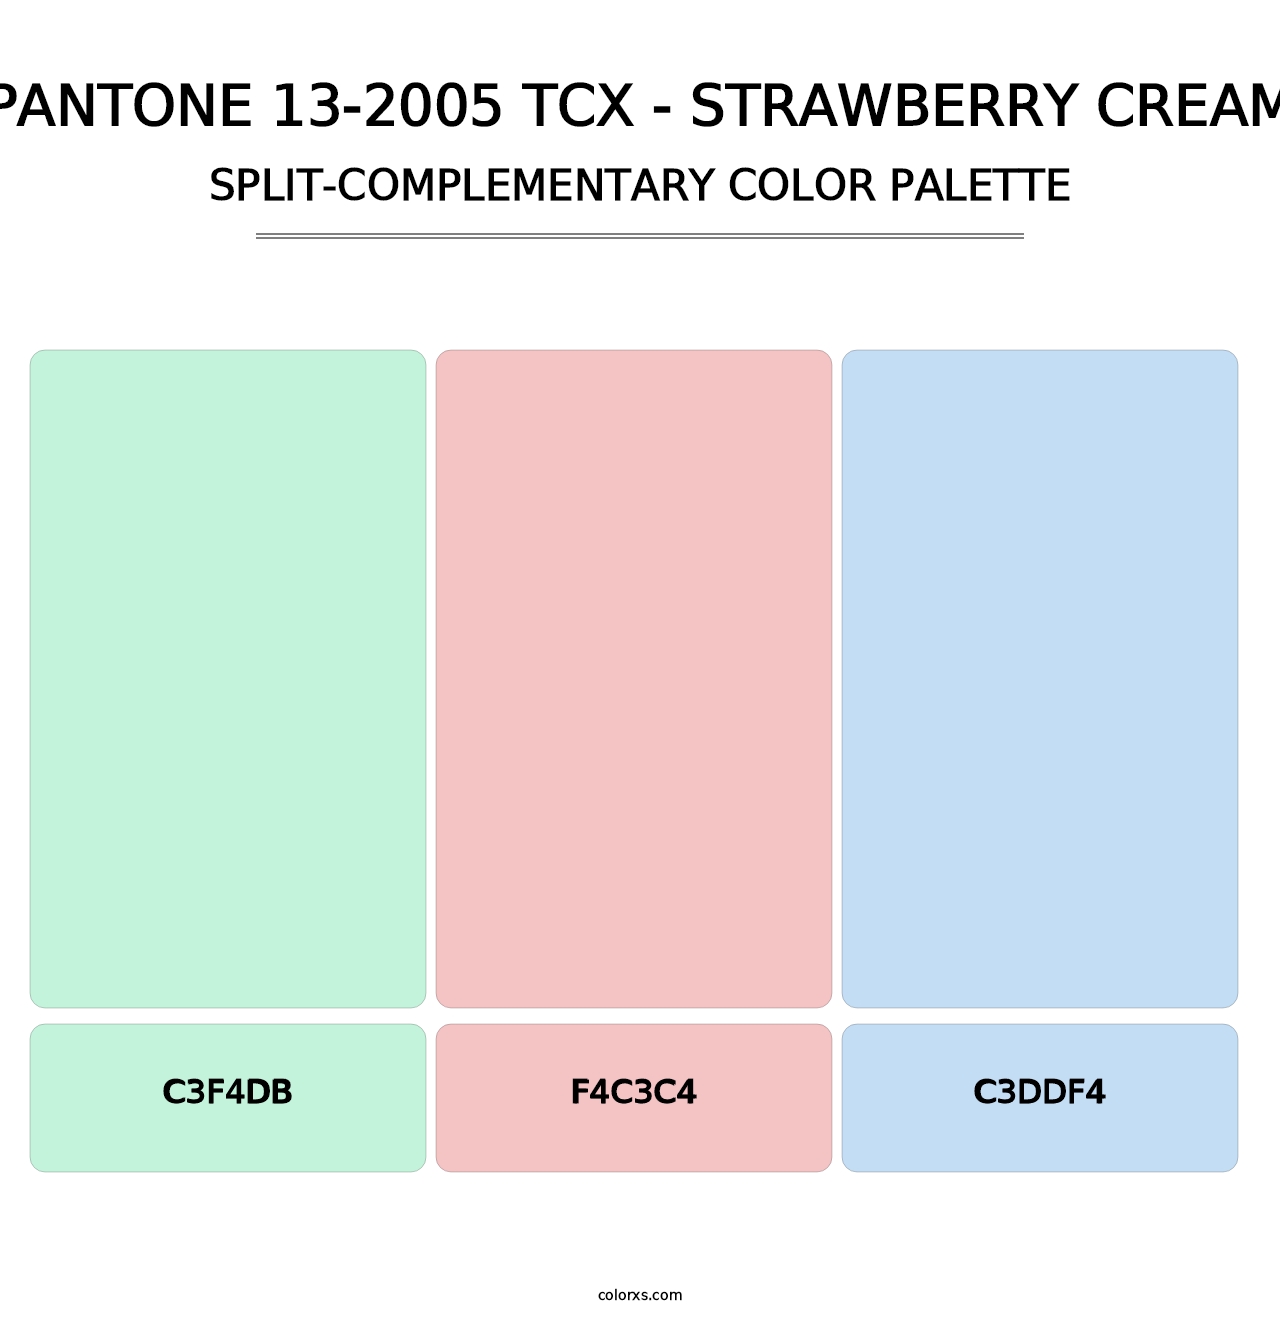 PANTONE 13-2005 TCX - Strawberry Cream - Split-Complementary Color Palette